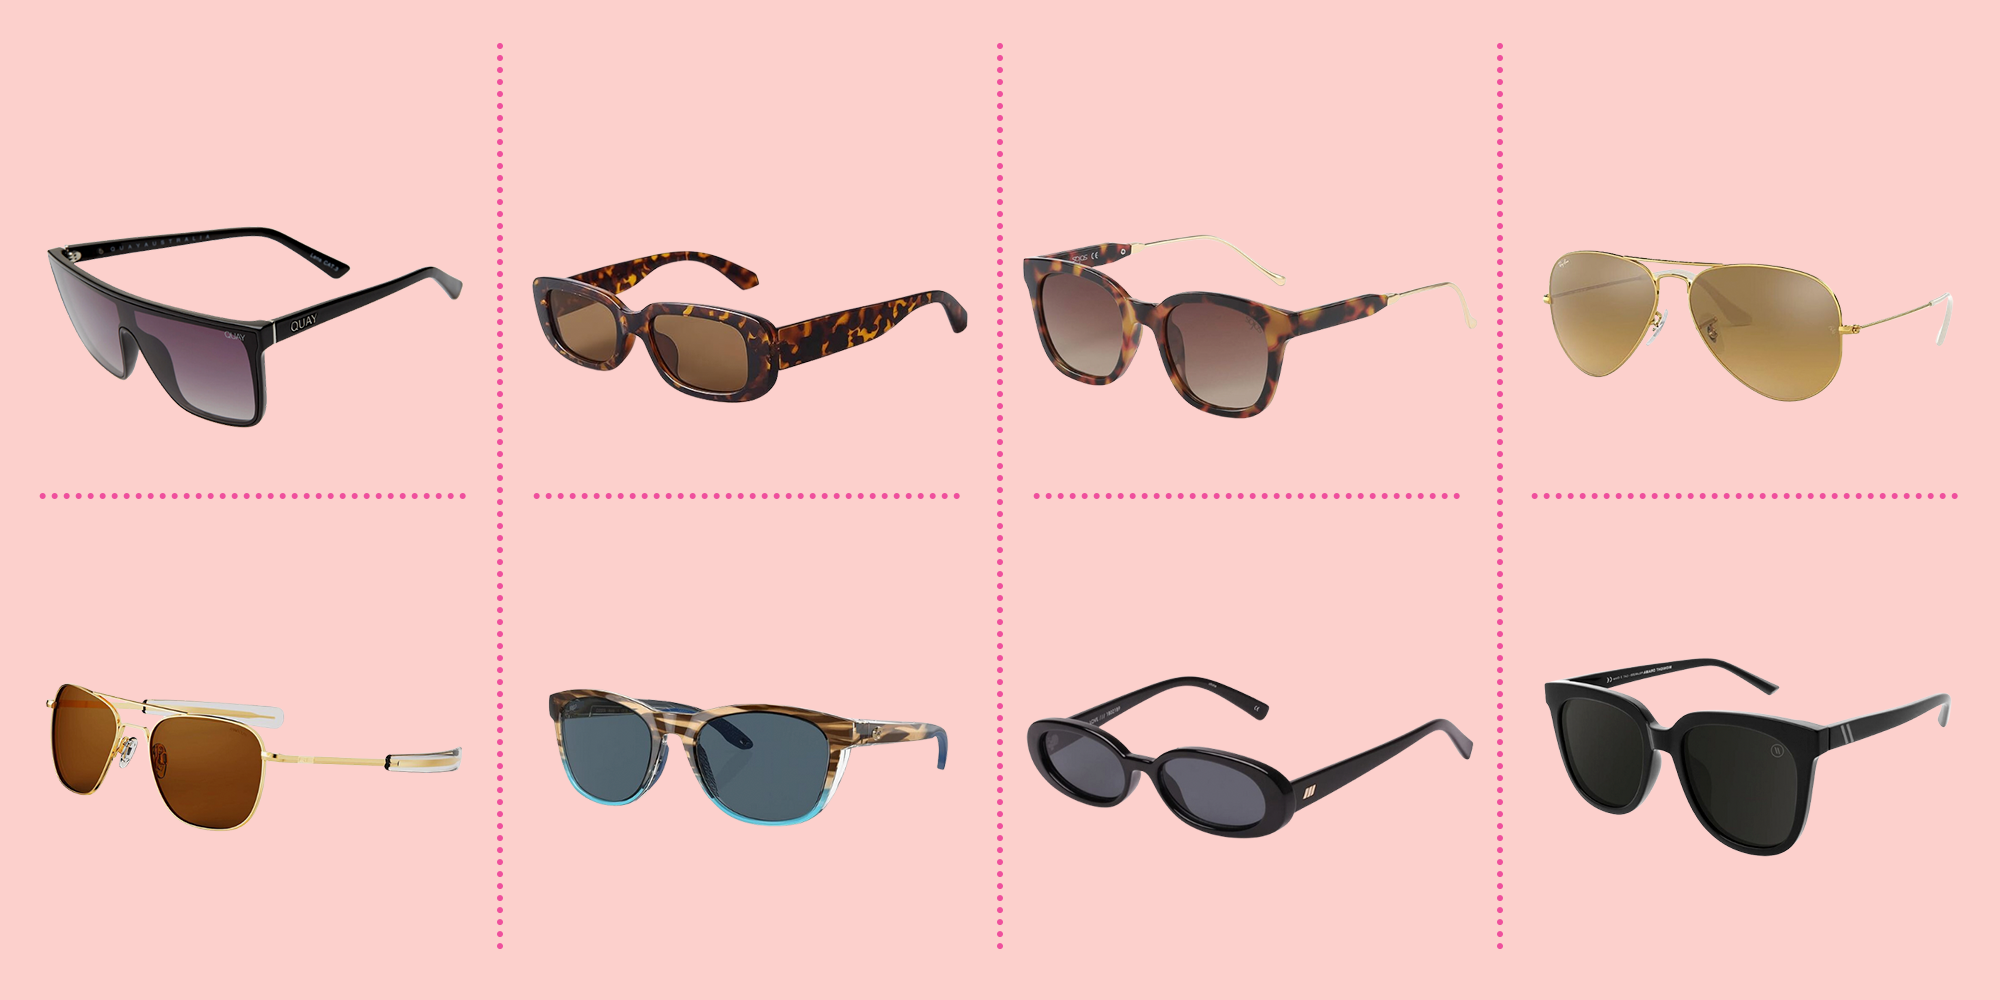 LVIOE Sunglasses Polarized UV400 Protection Classic Shades for Women, Pink